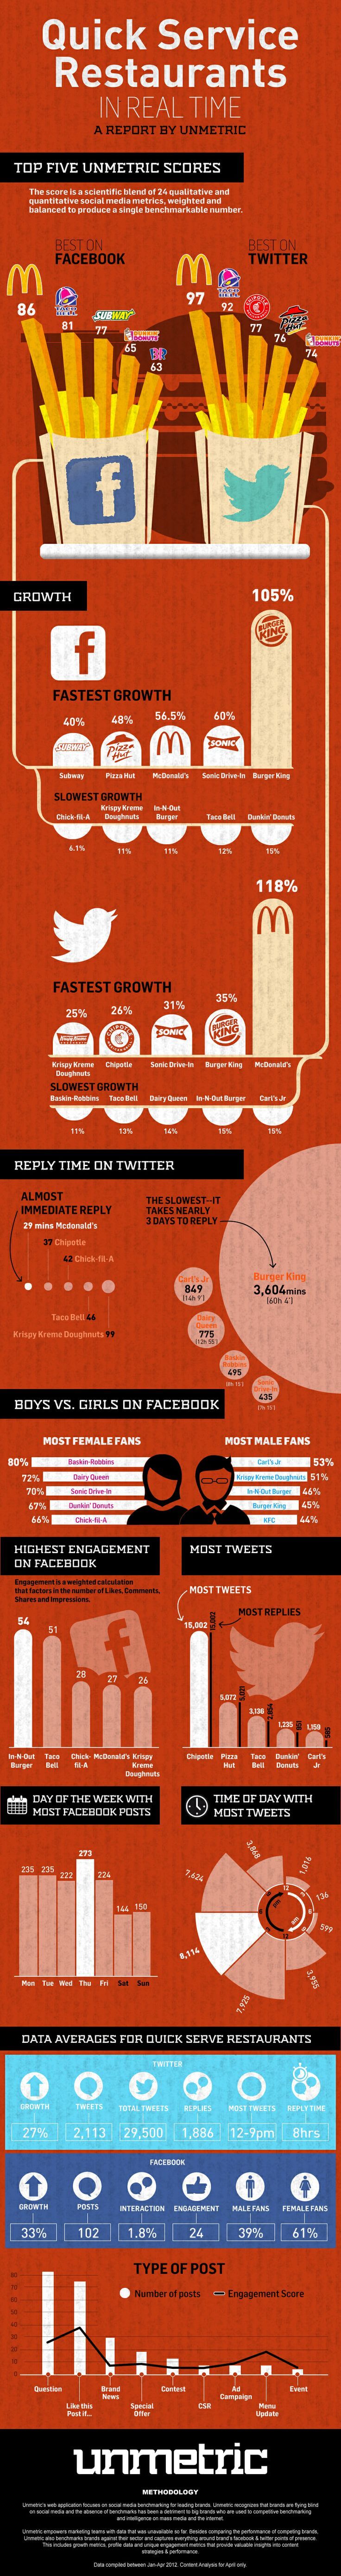 Leading QSR Brands on Social Media Infographic